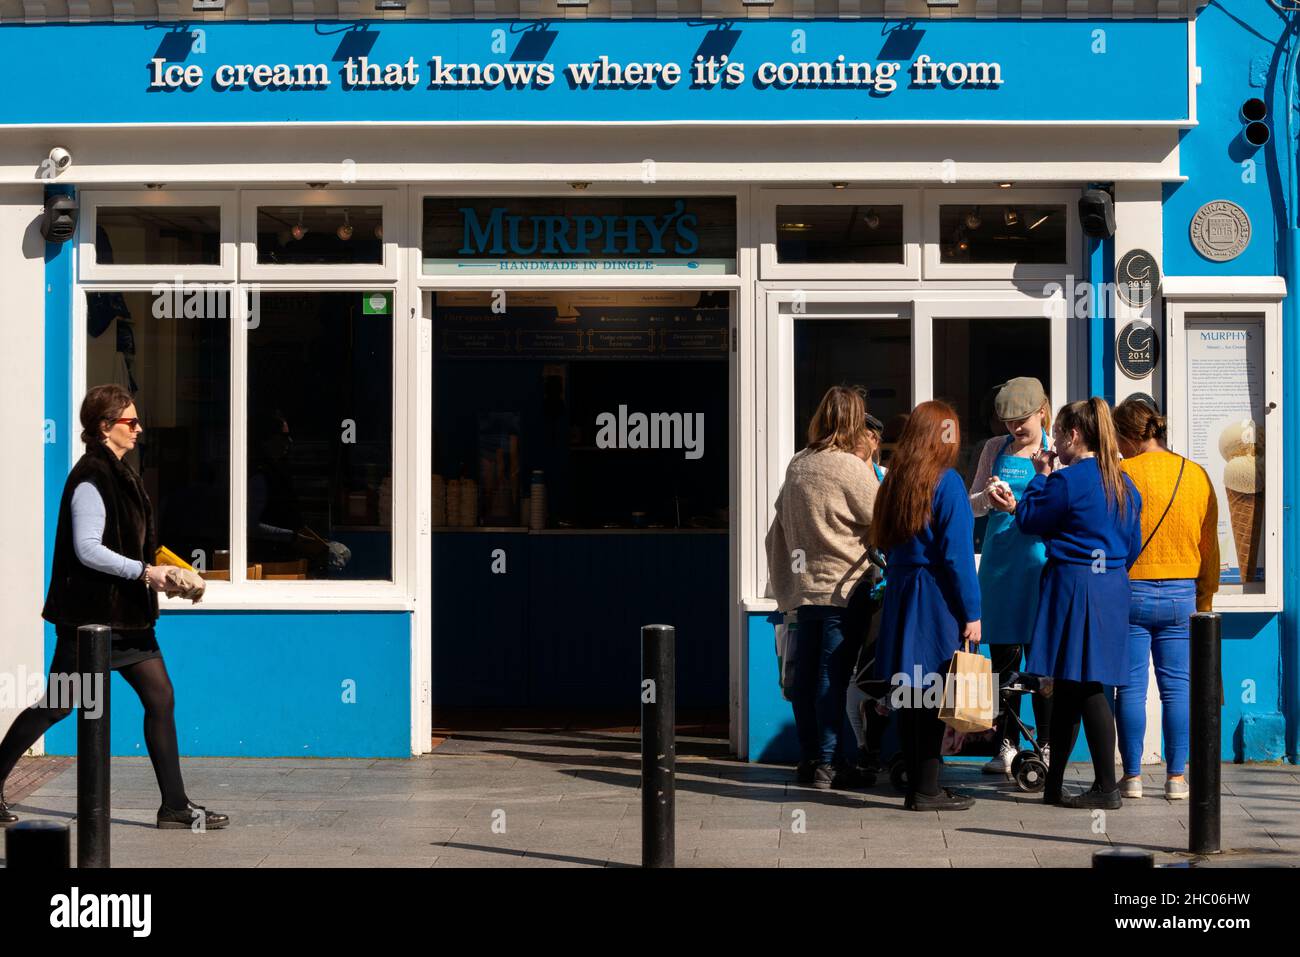 Murphy's ice cream workers offering free ice cream samples to passersby on Main Street Killarney, County Kerry, Ireland Stock Photo